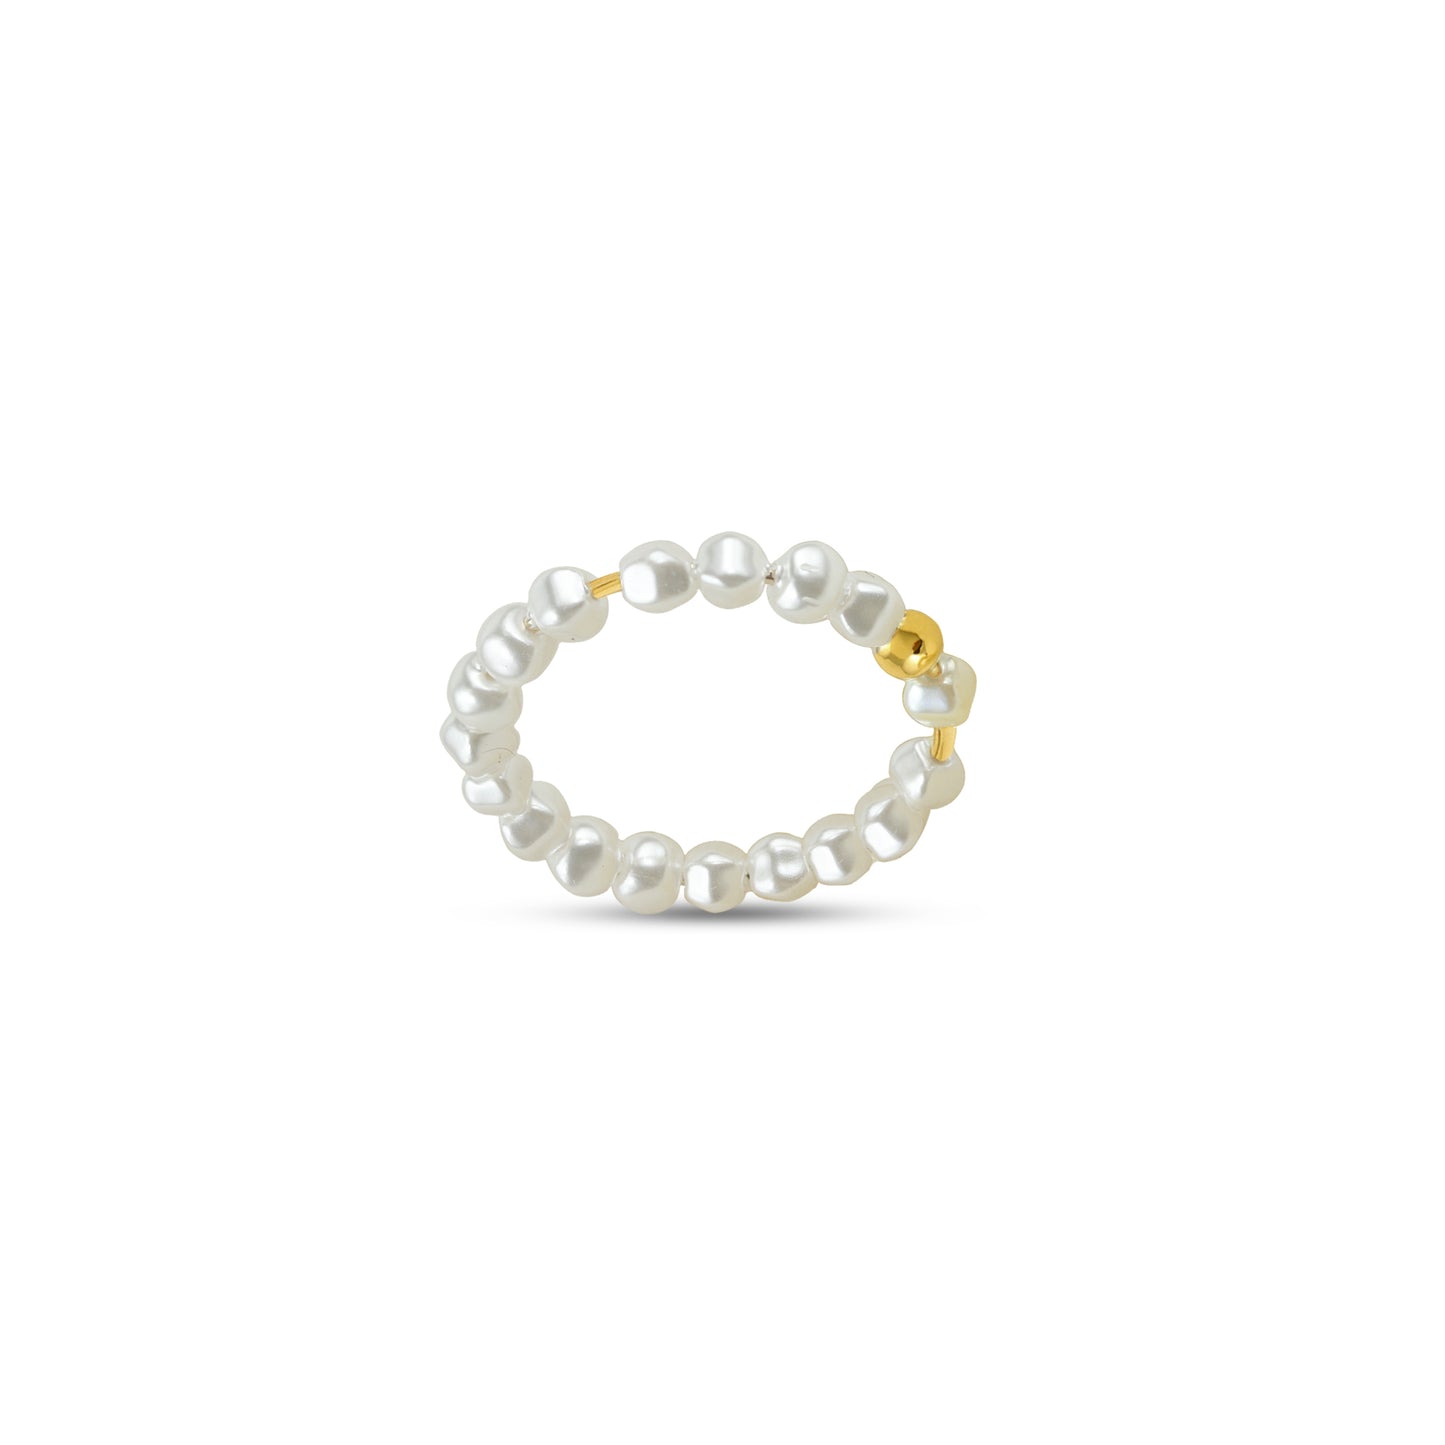 The Tallulah Pearl Ring